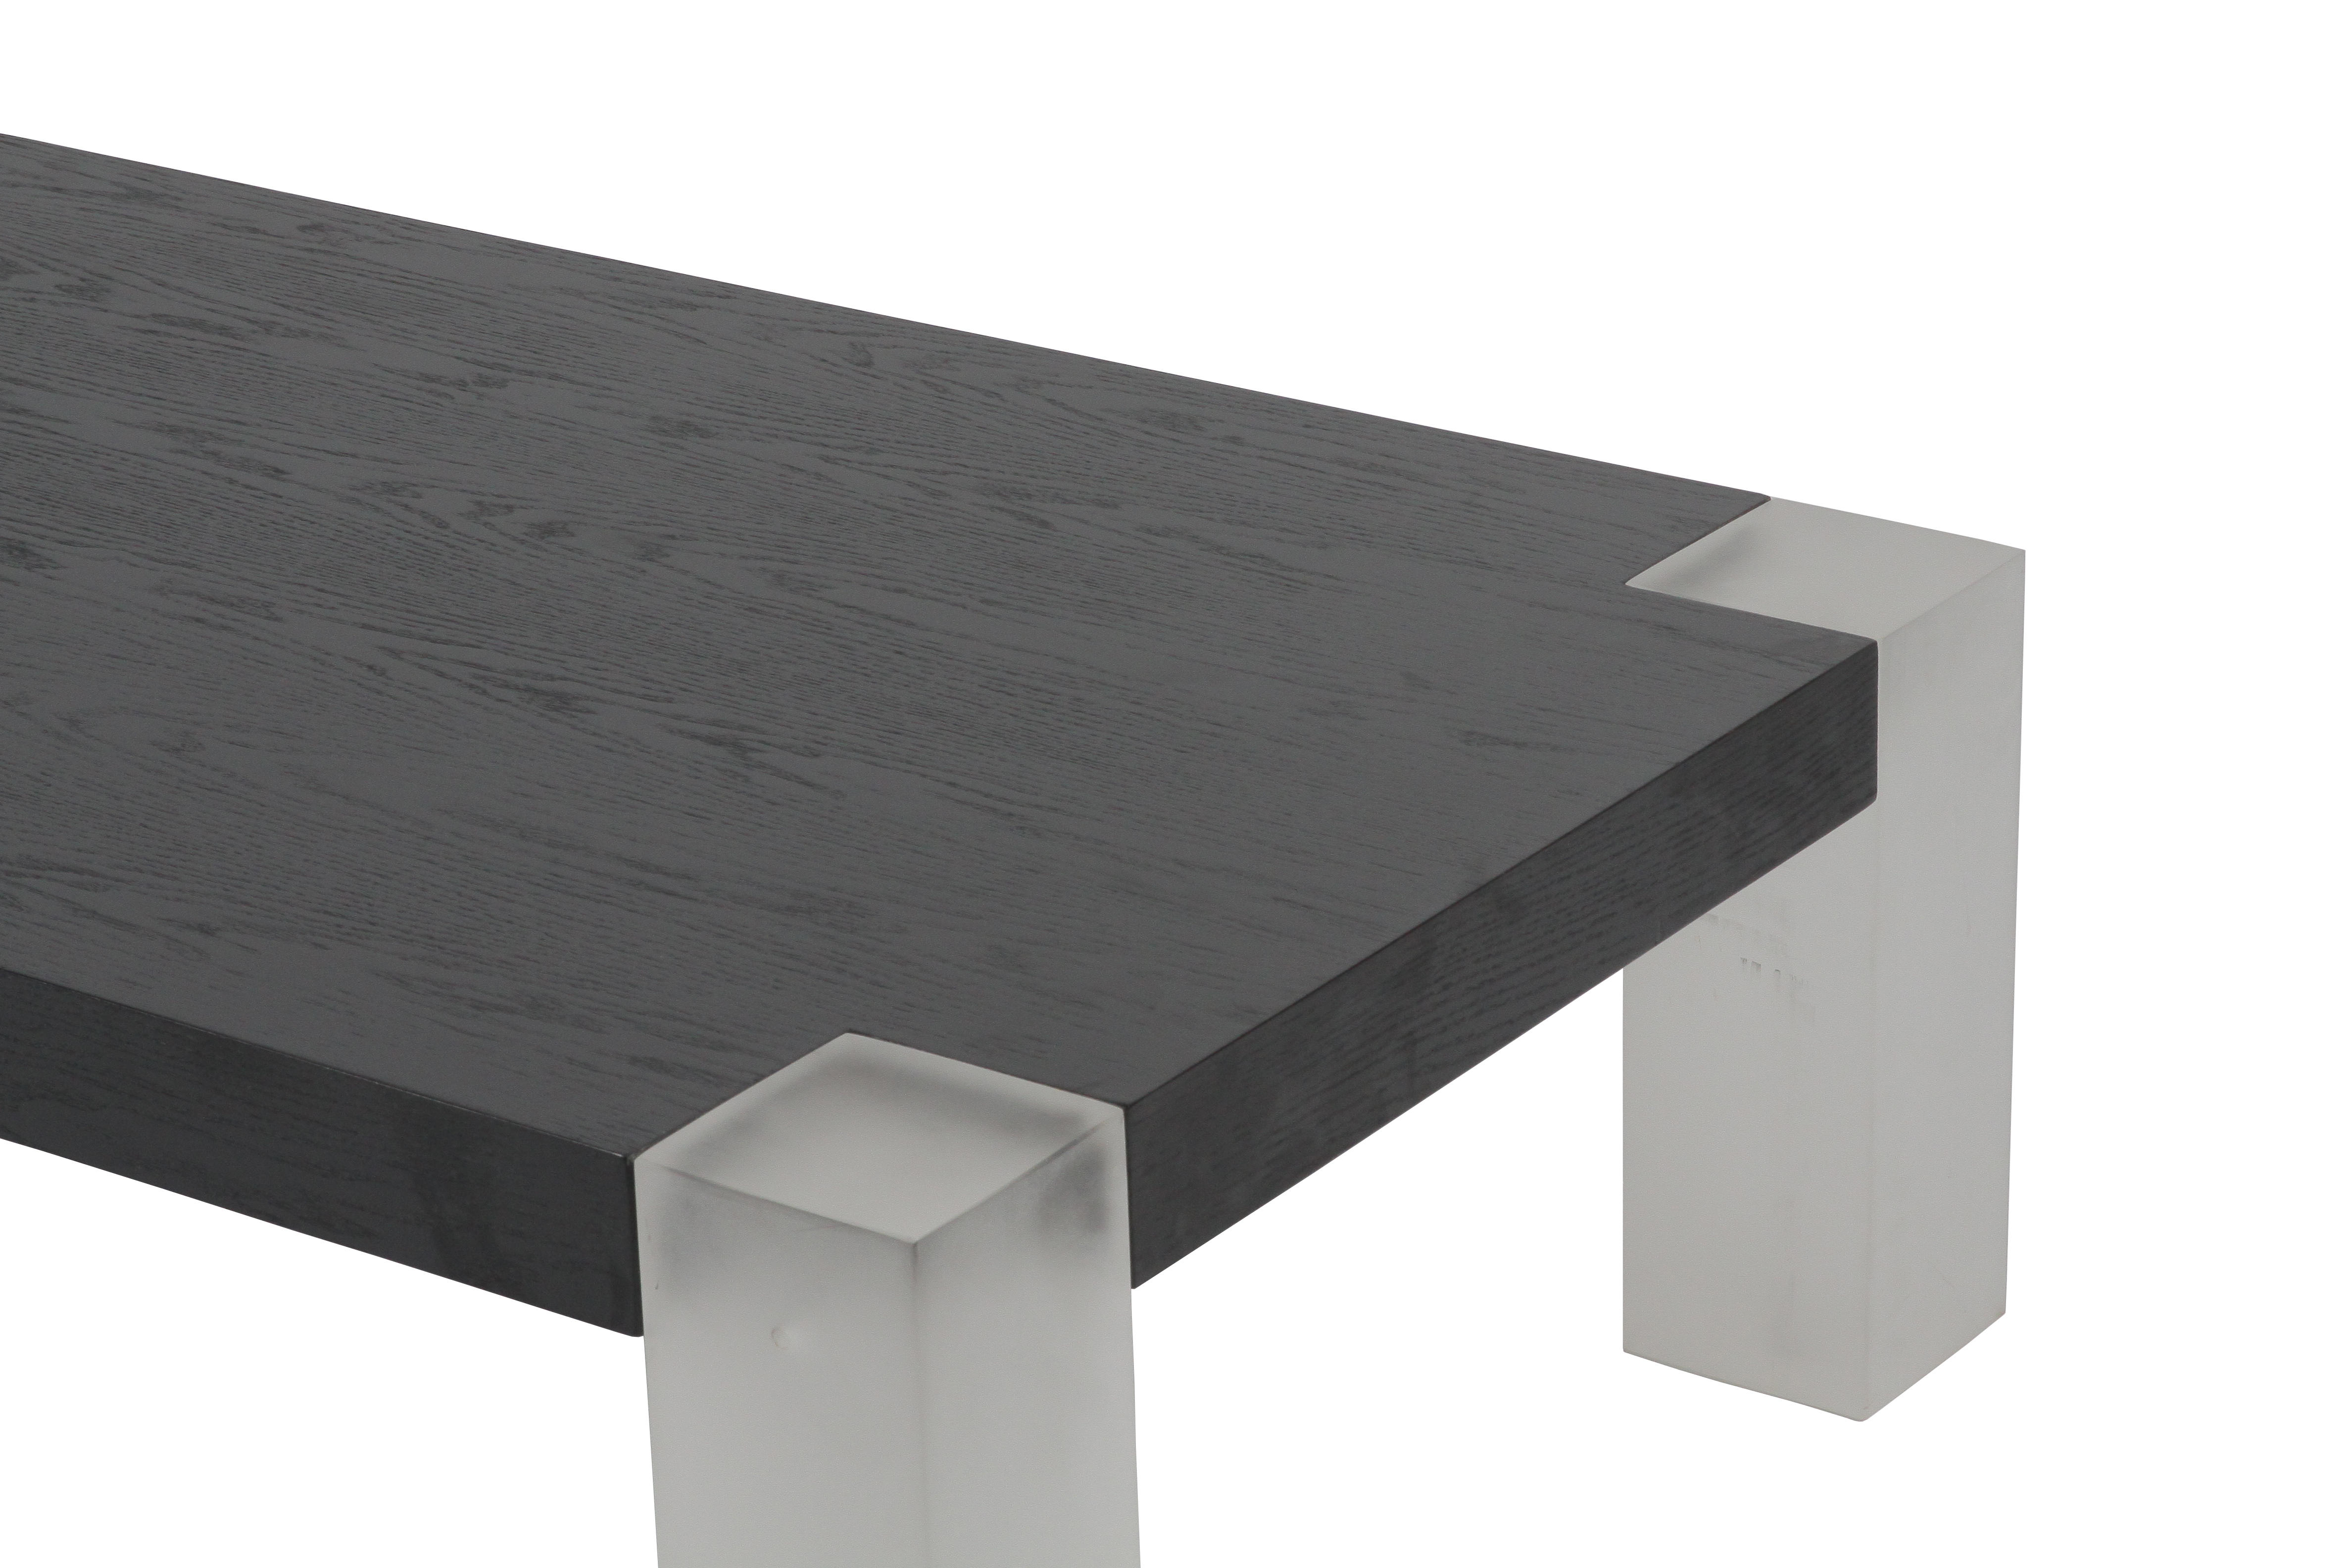 RJT-9706 contemporary acrylic leg oak wood top retangular Coffee table